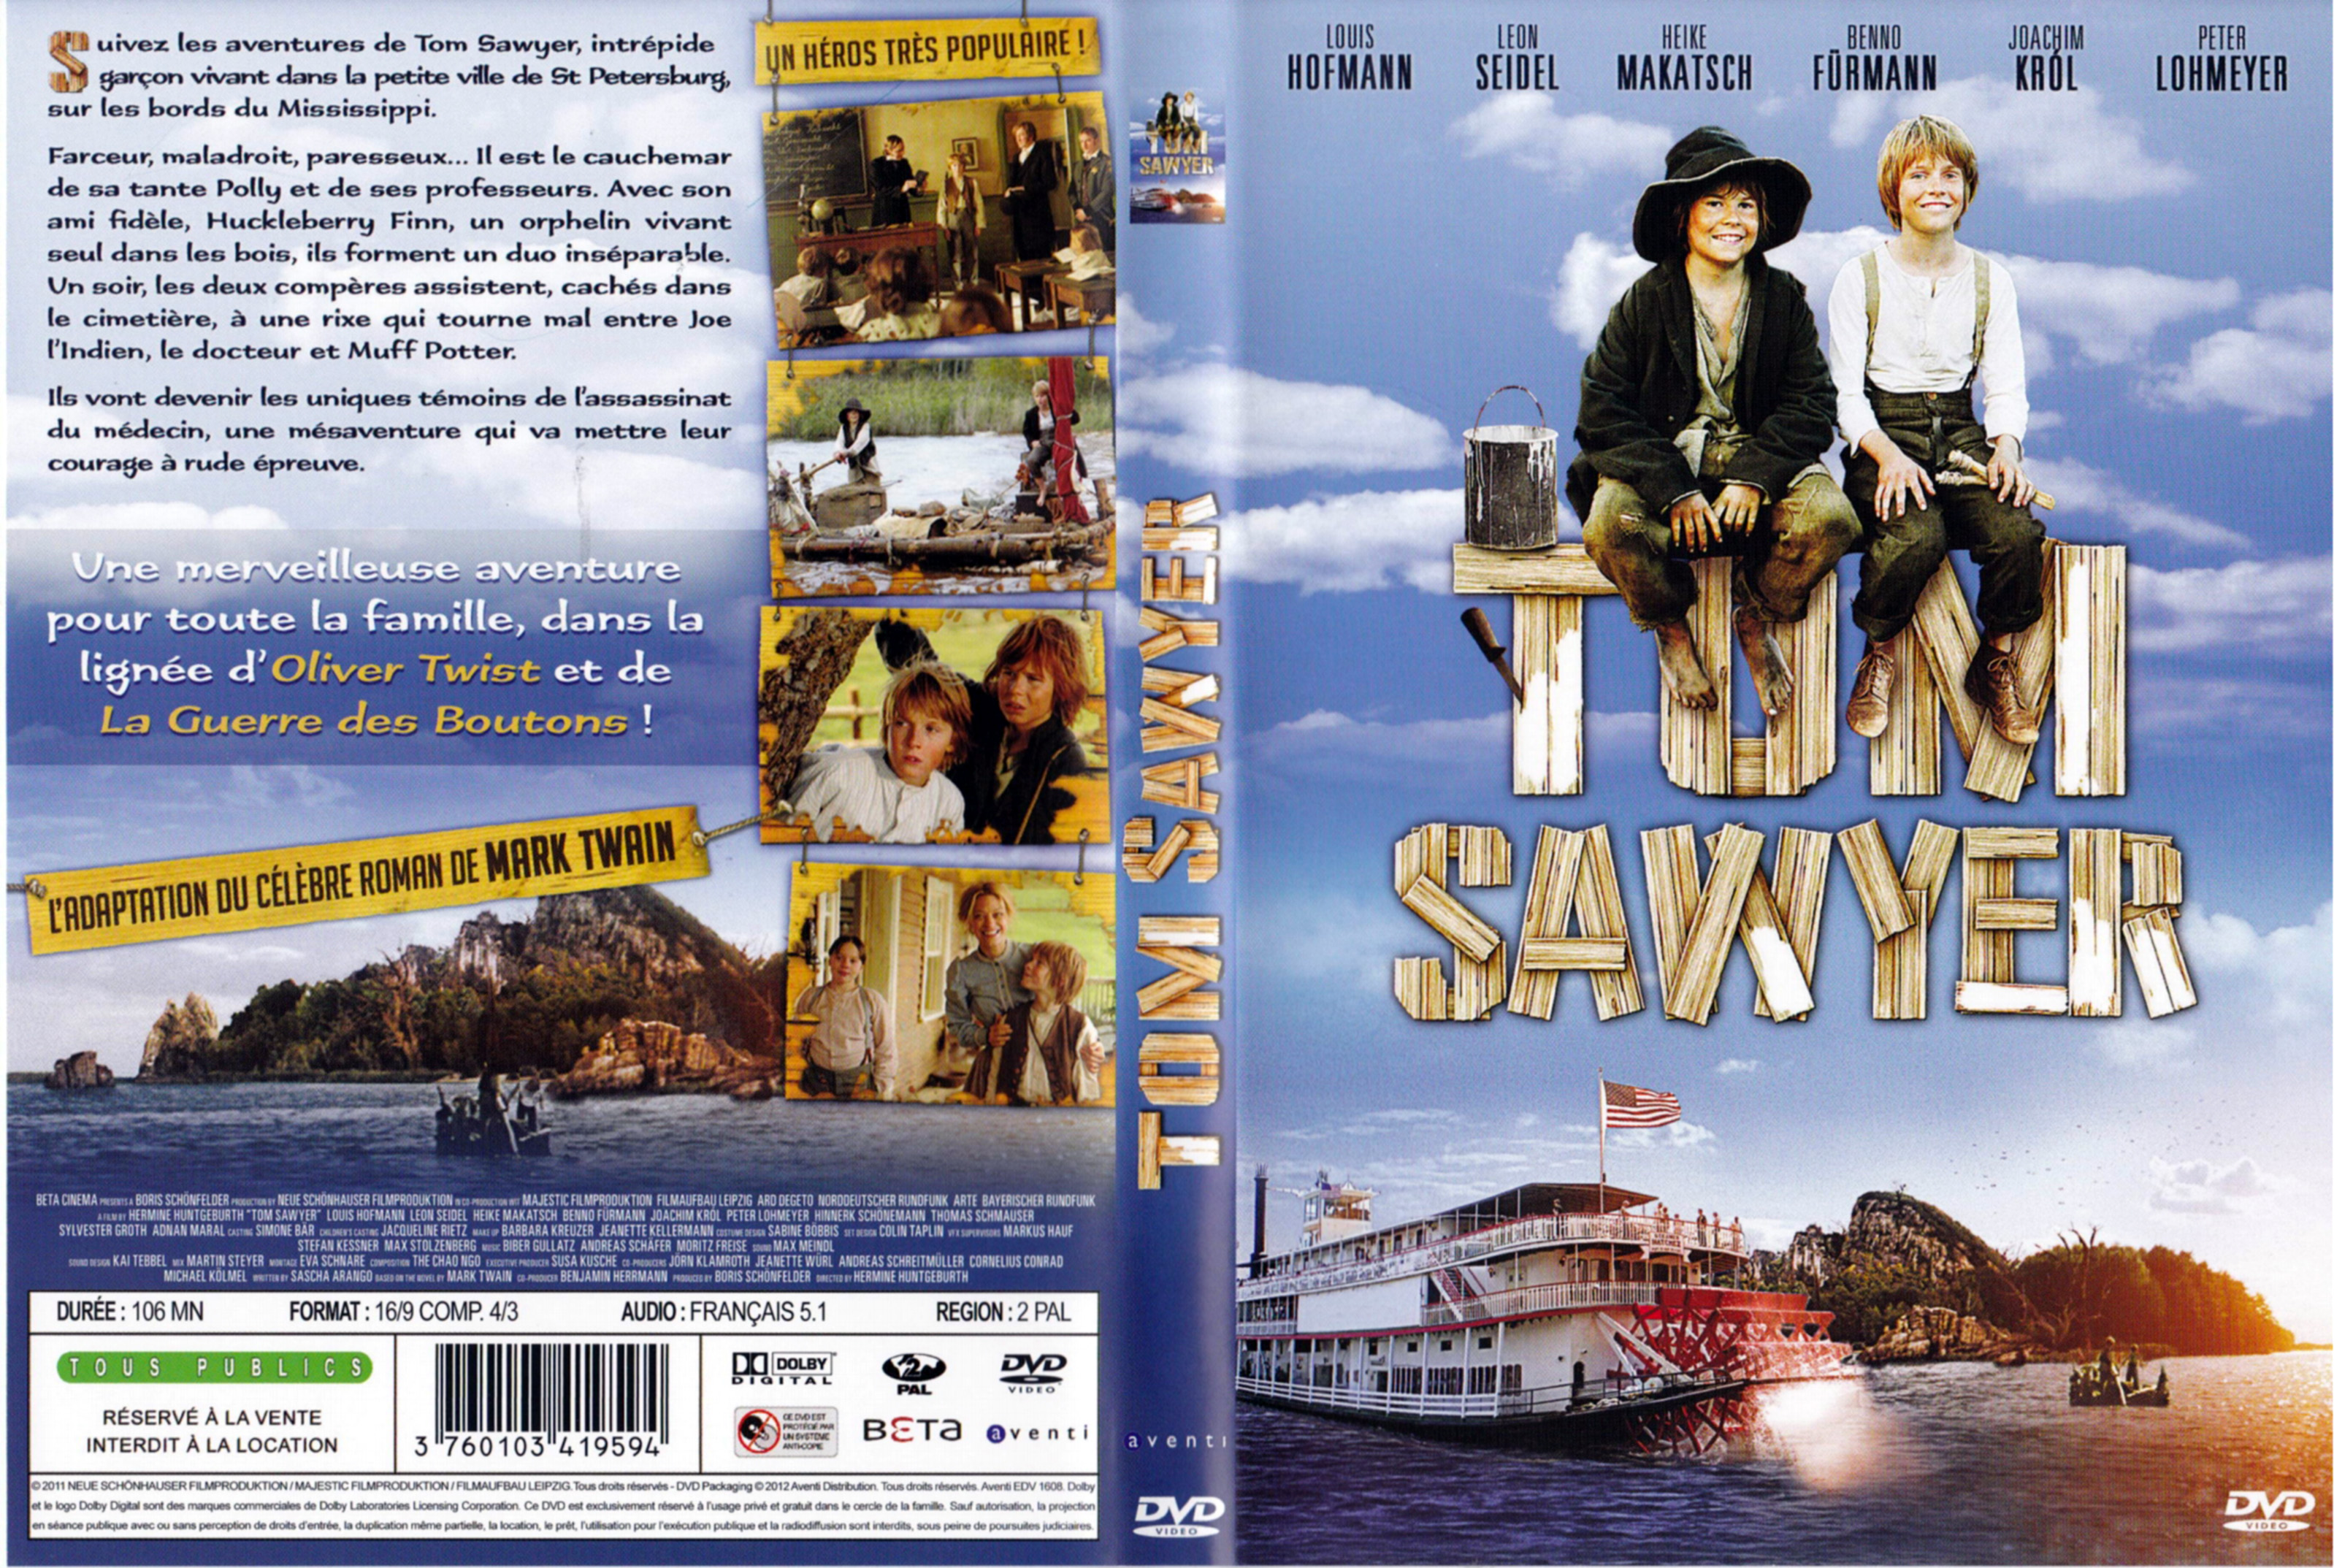 Jaquette DVD Tom Sawyer (2011)